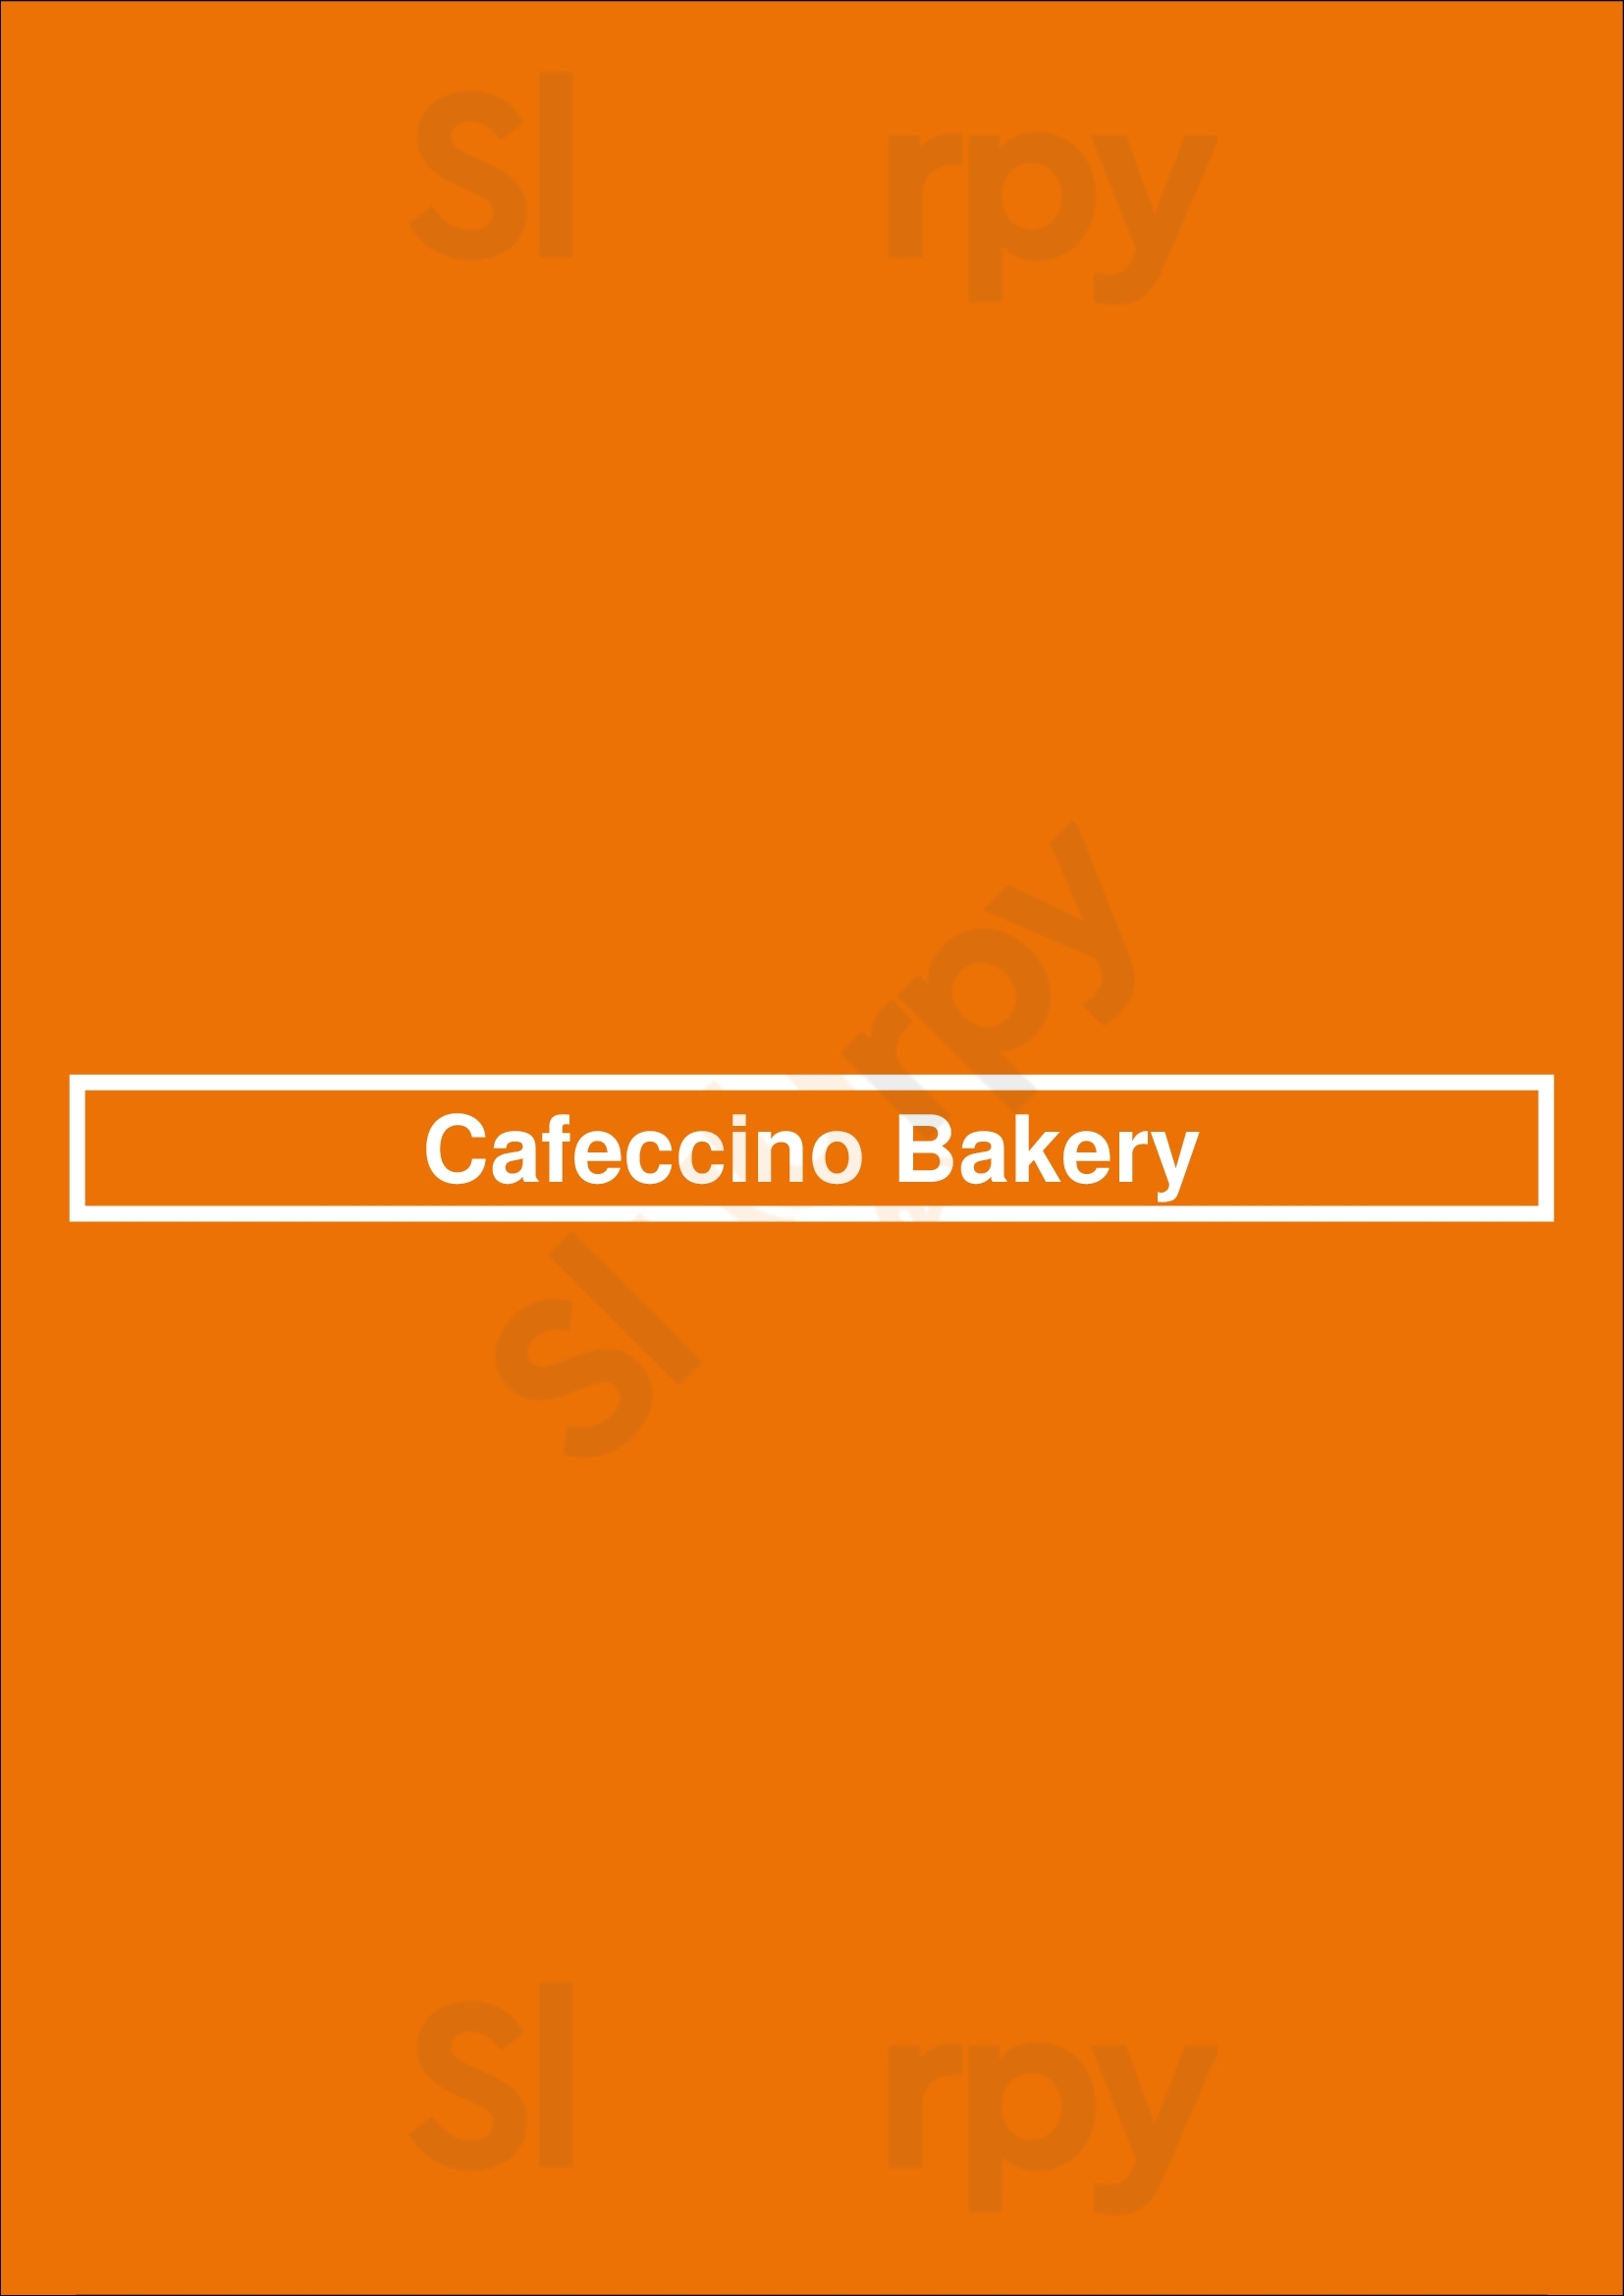 Cafeccino Bakery Bronx Menu - 1